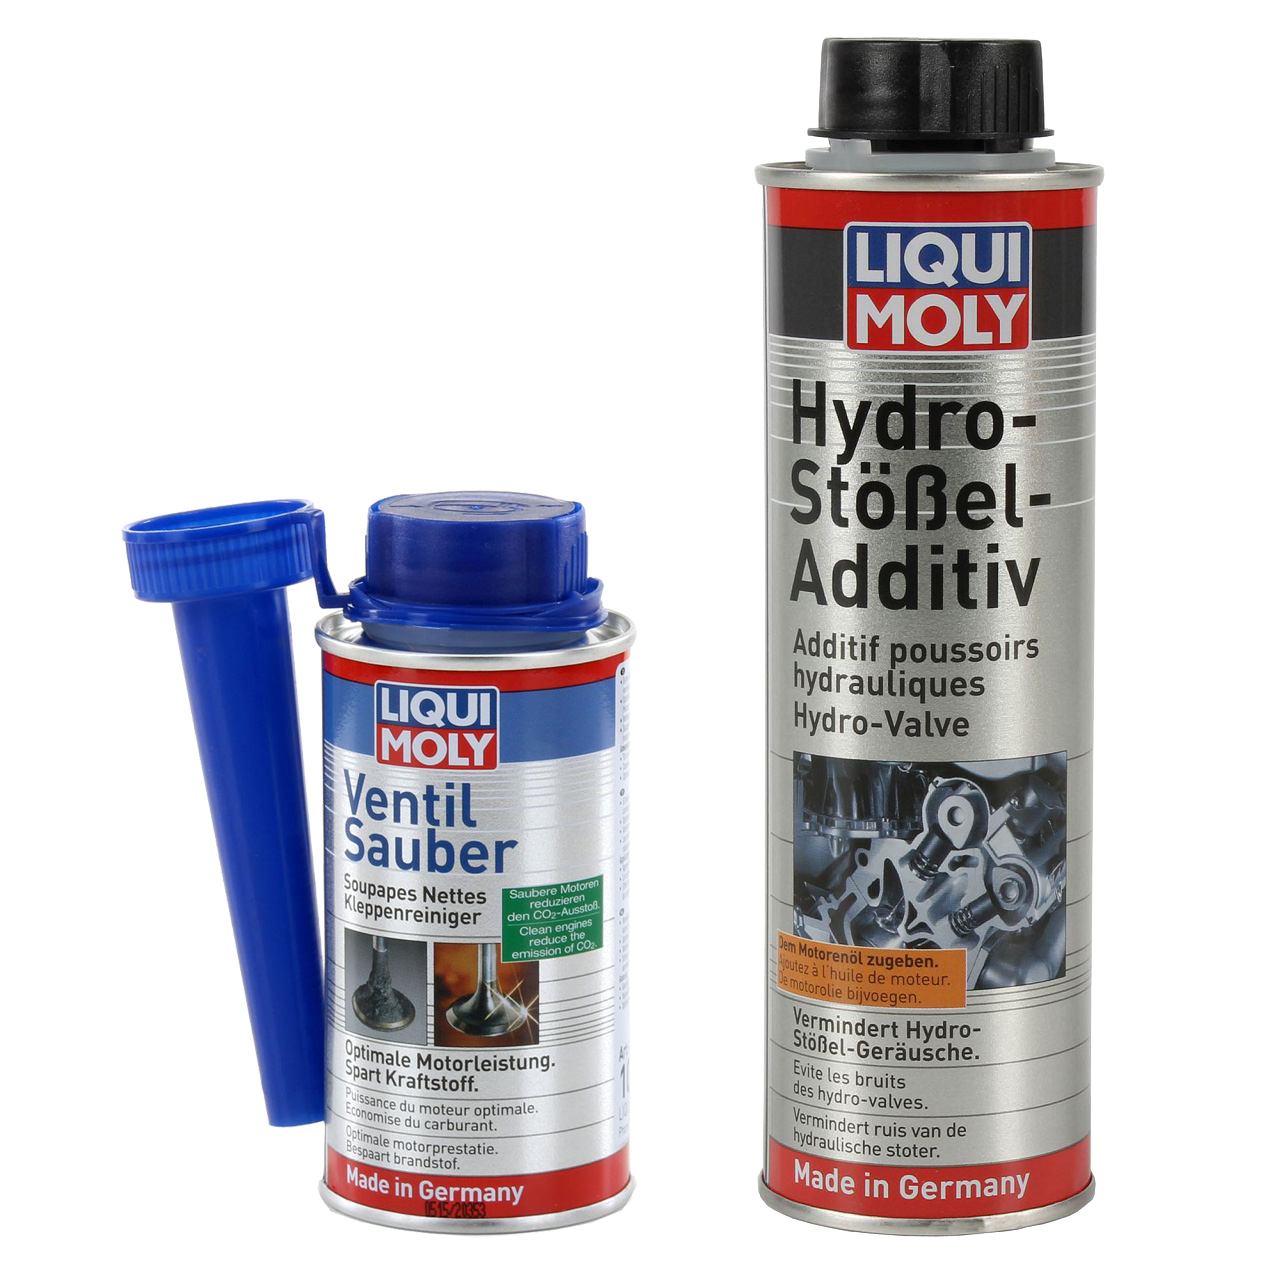 LIQUI MOLY Additiv Set Ventil Sauber 150ml + Hydro-Stössel-Additiv Zusatz 300ml